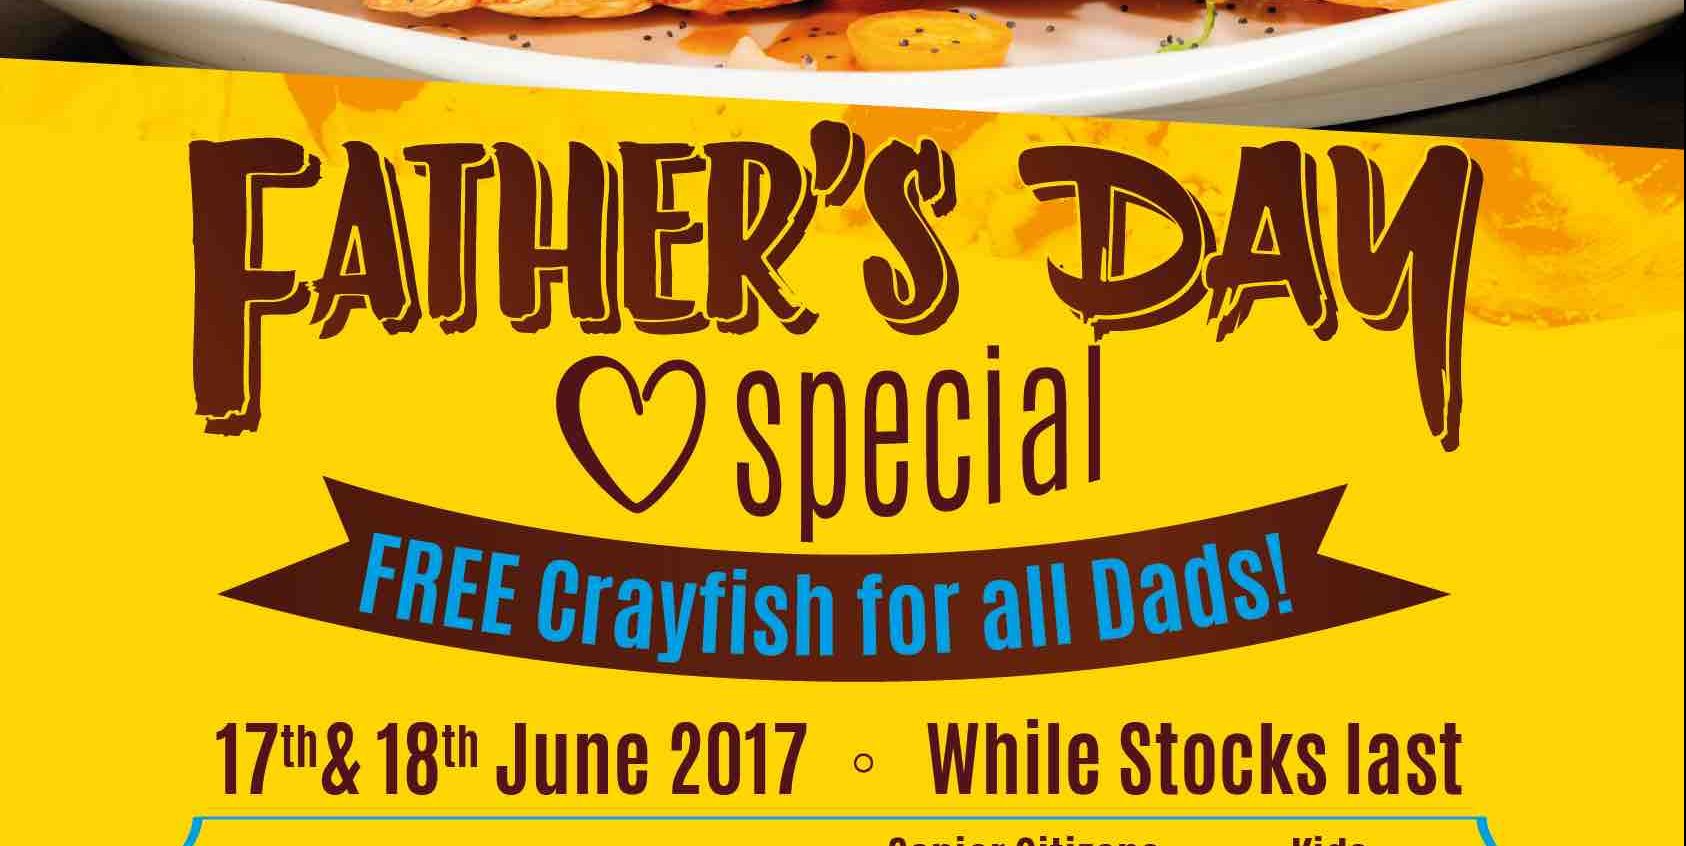 Sakura International Buffet SG FREE Crayfish Father’s Day Promotion 17-18 Jun 2017